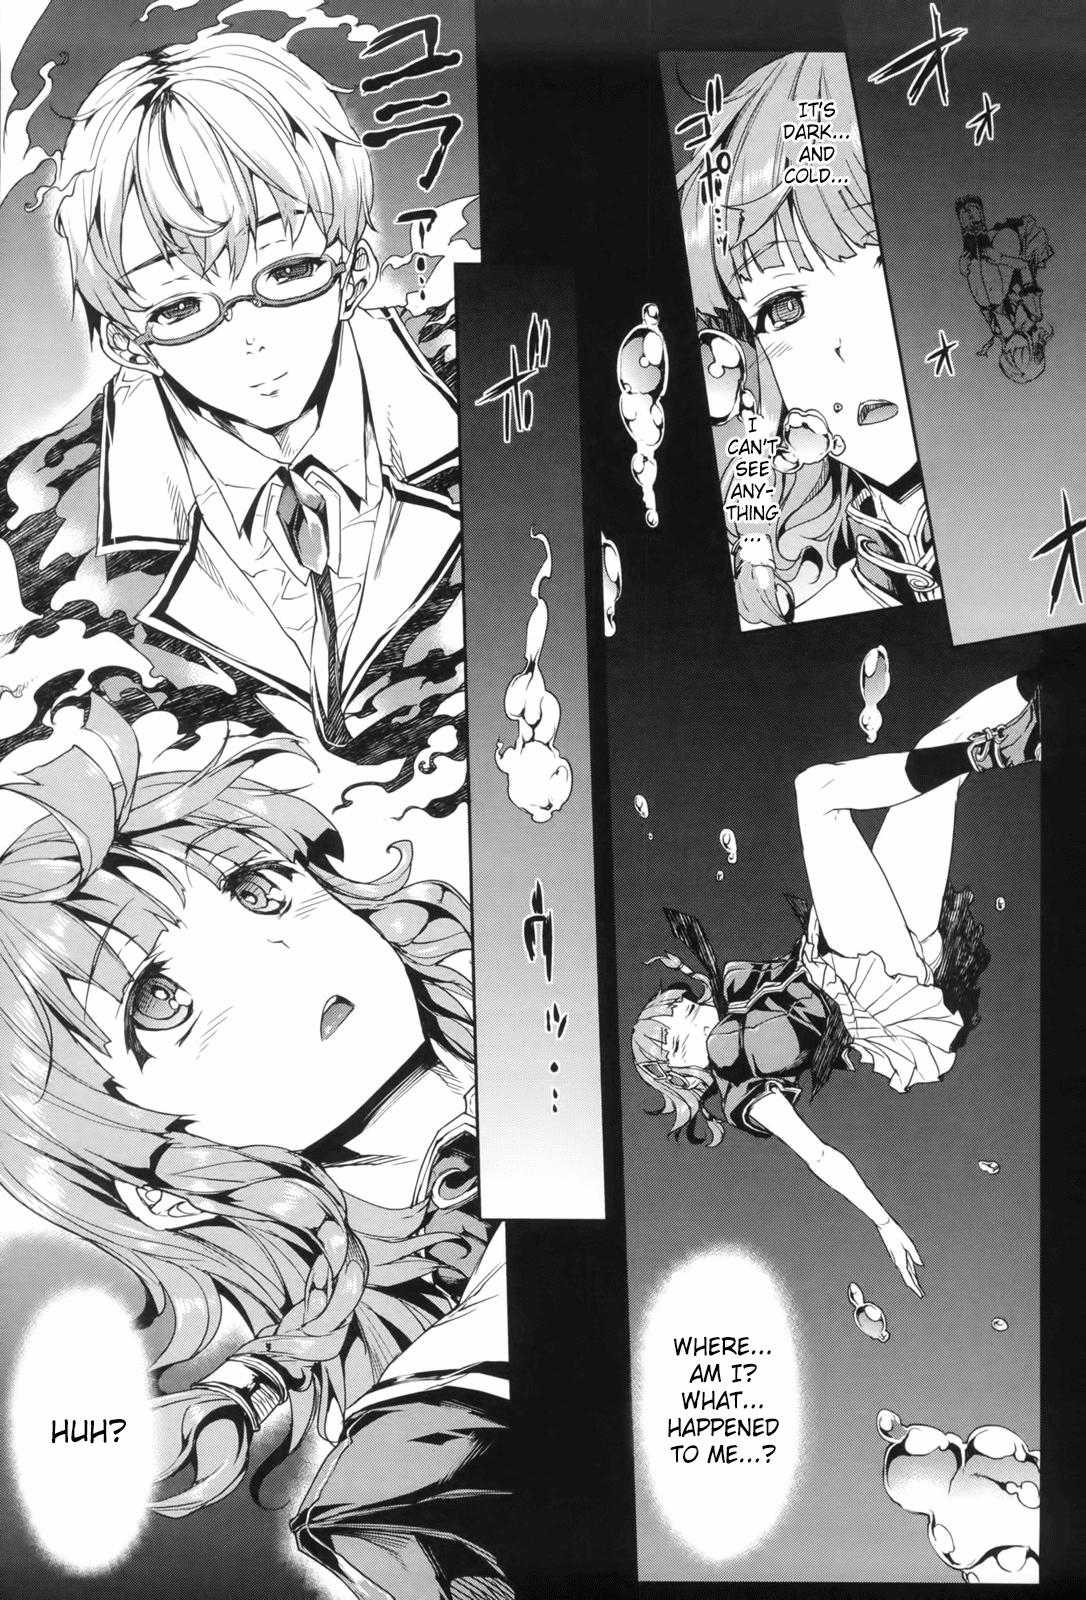 [ERECT TOUCH (Erect Sawaru)] Shinkyoku no Grimoire -PANDRA saga 2nd story- Ch 01-10 + Side Story x 3 [English] [SaHa] 86